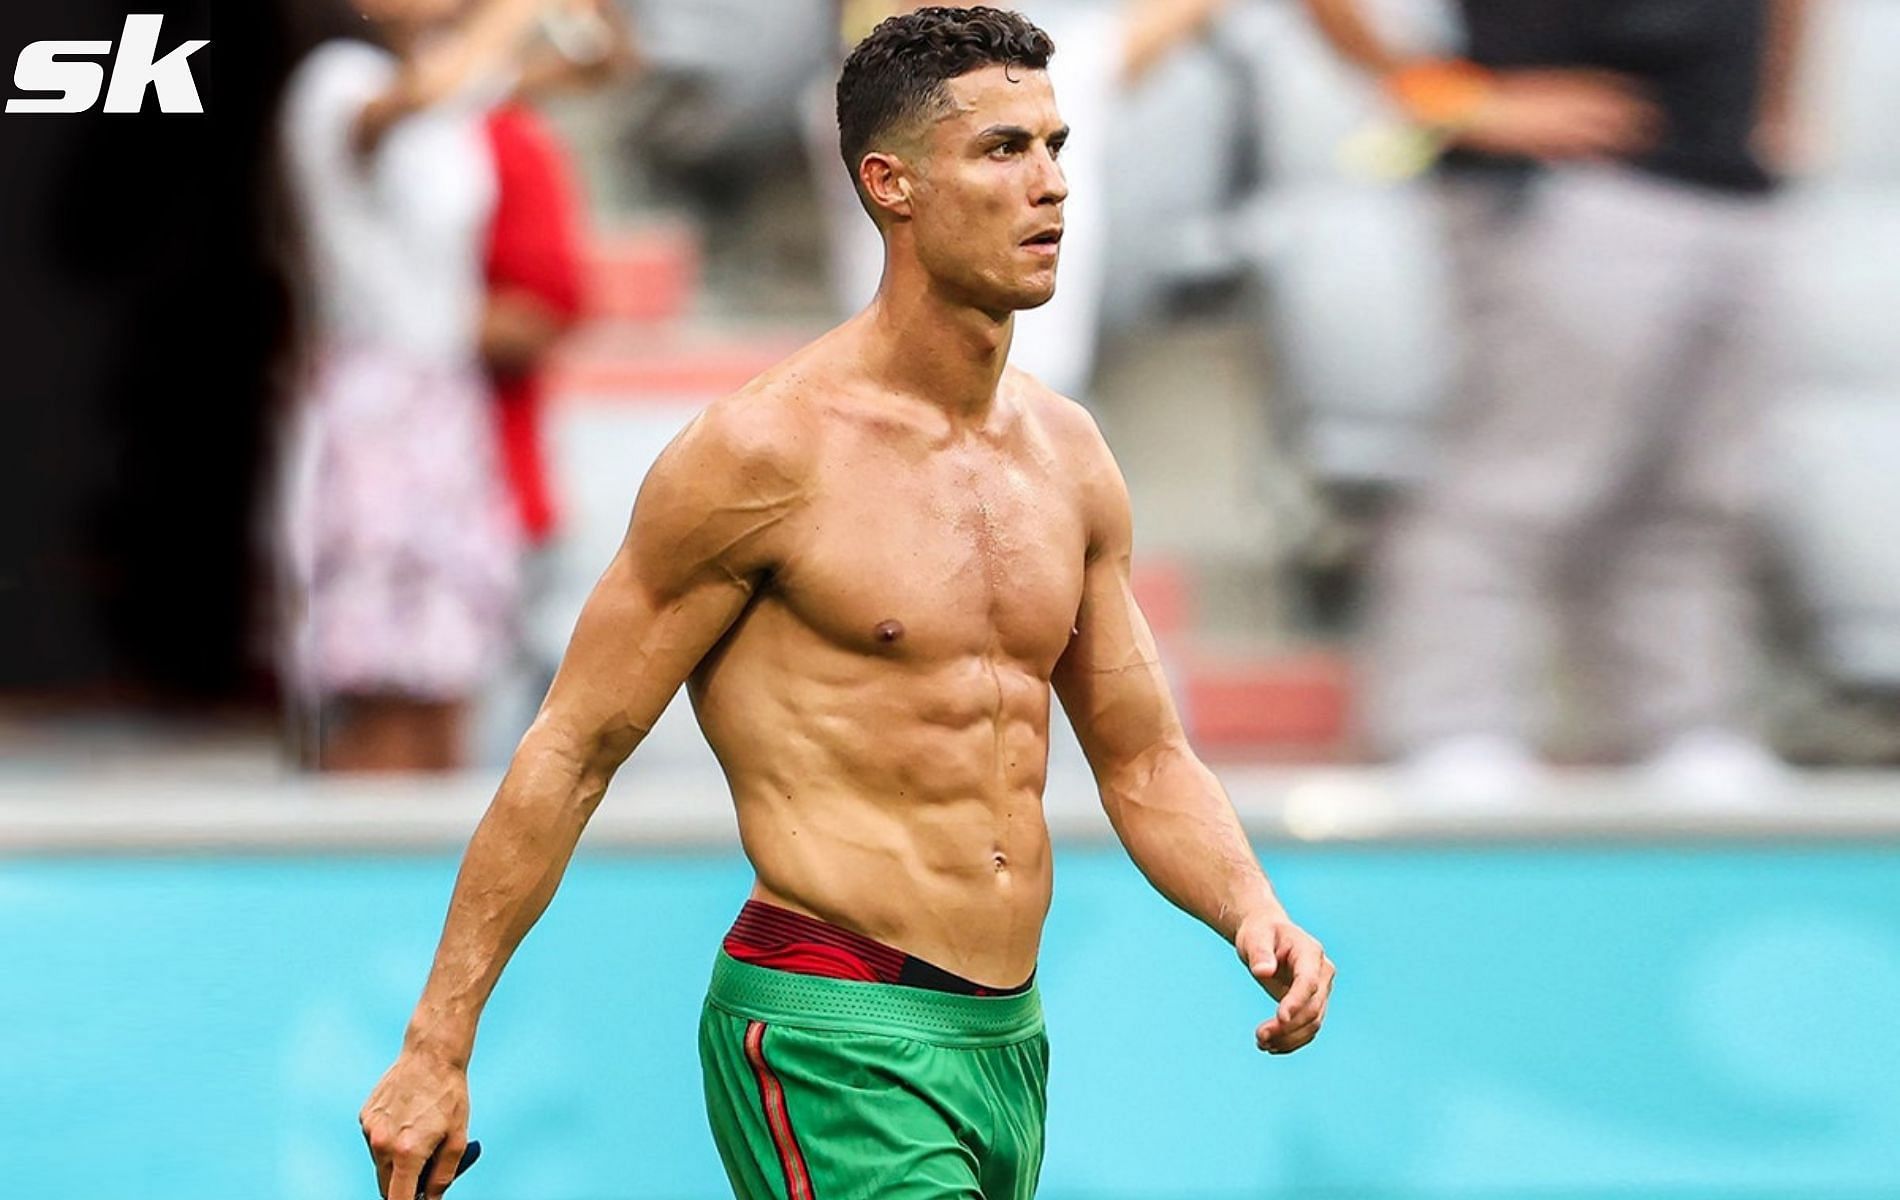 Cristiano Ronaldo is well-known for his intense training regimes (Image via Sportskeeda)